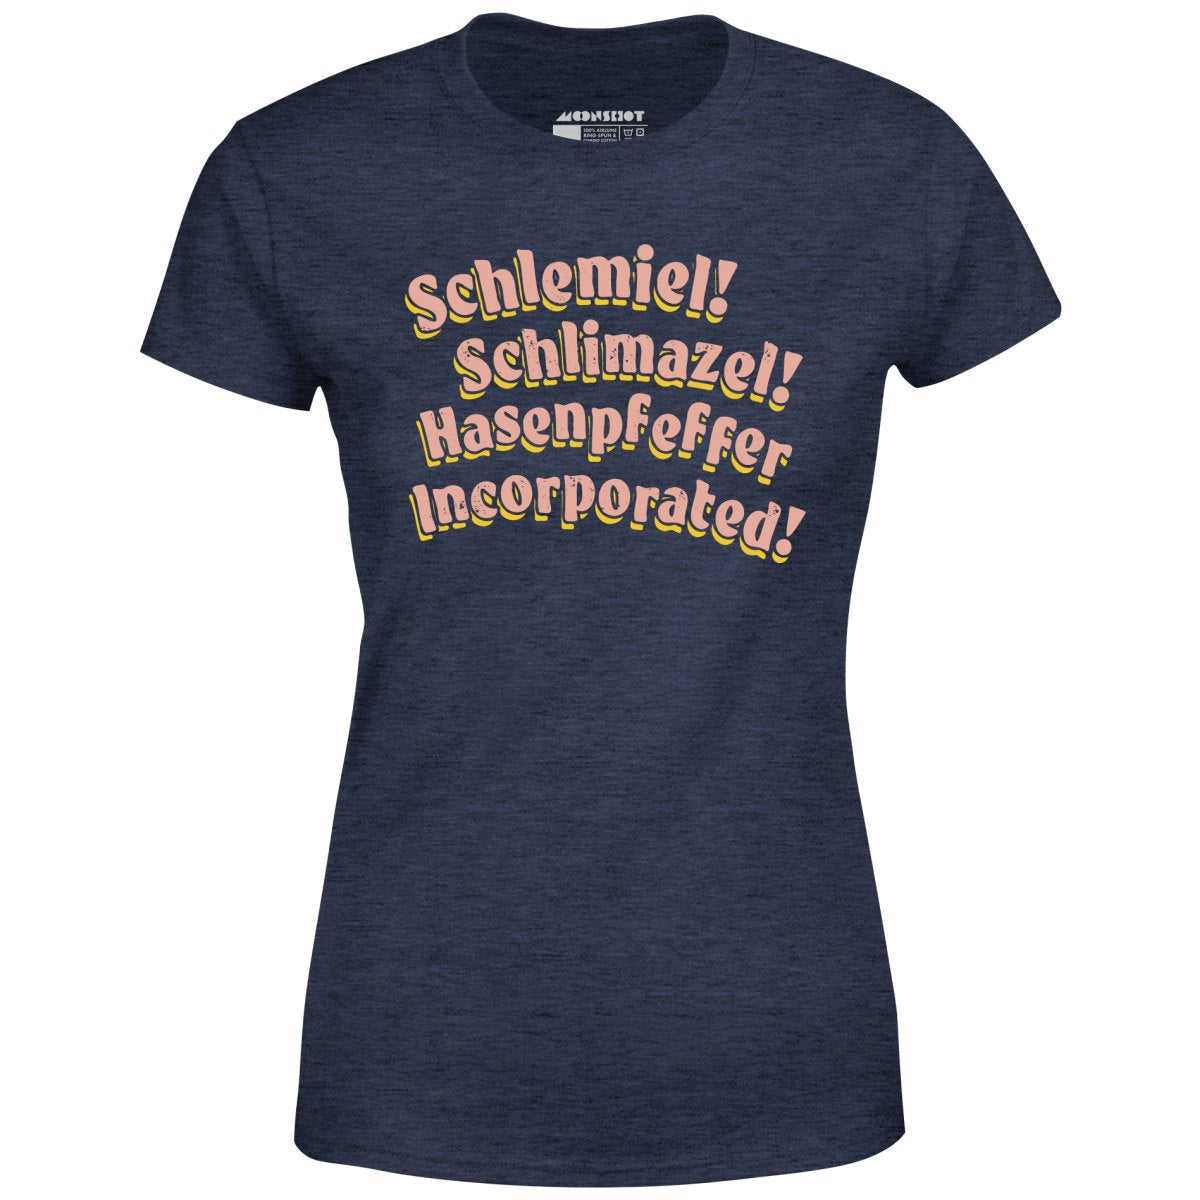 Schlemiel! Schlimazel! Hasenpfeffer Incorporated - Women's T-Shirt